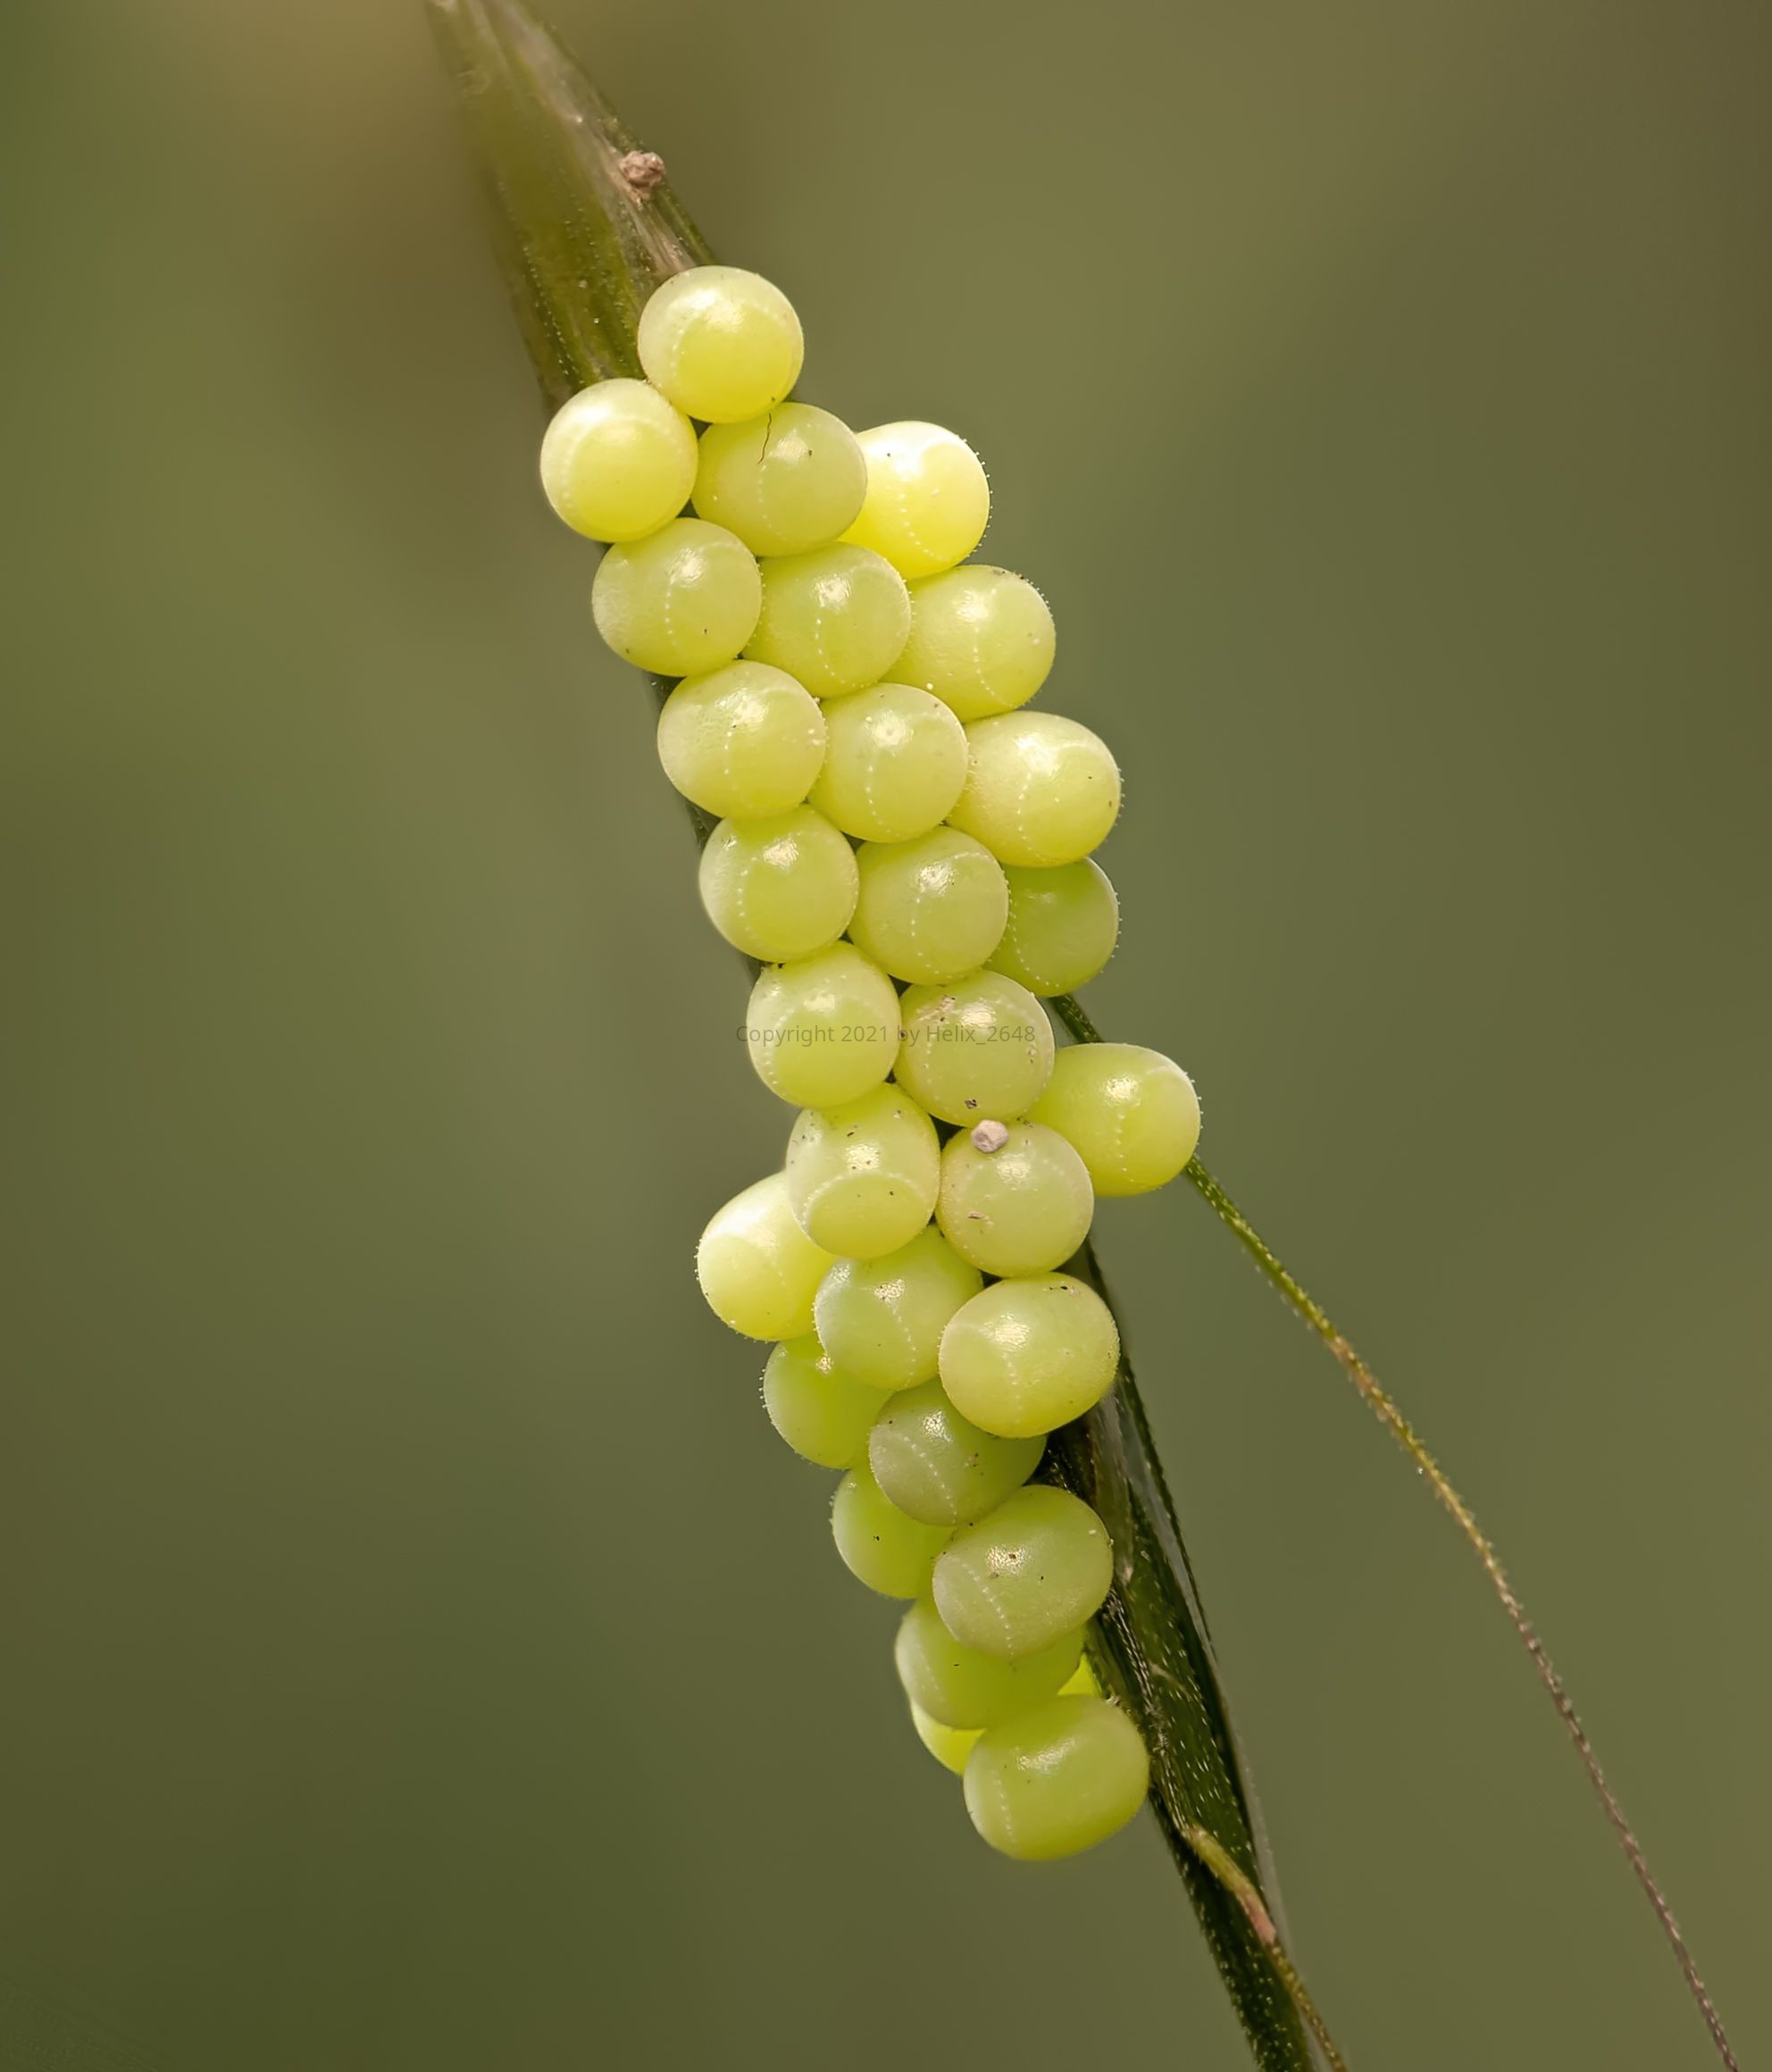 50_Eier der grünen Stinkwanze (Palomena prasina).jpg